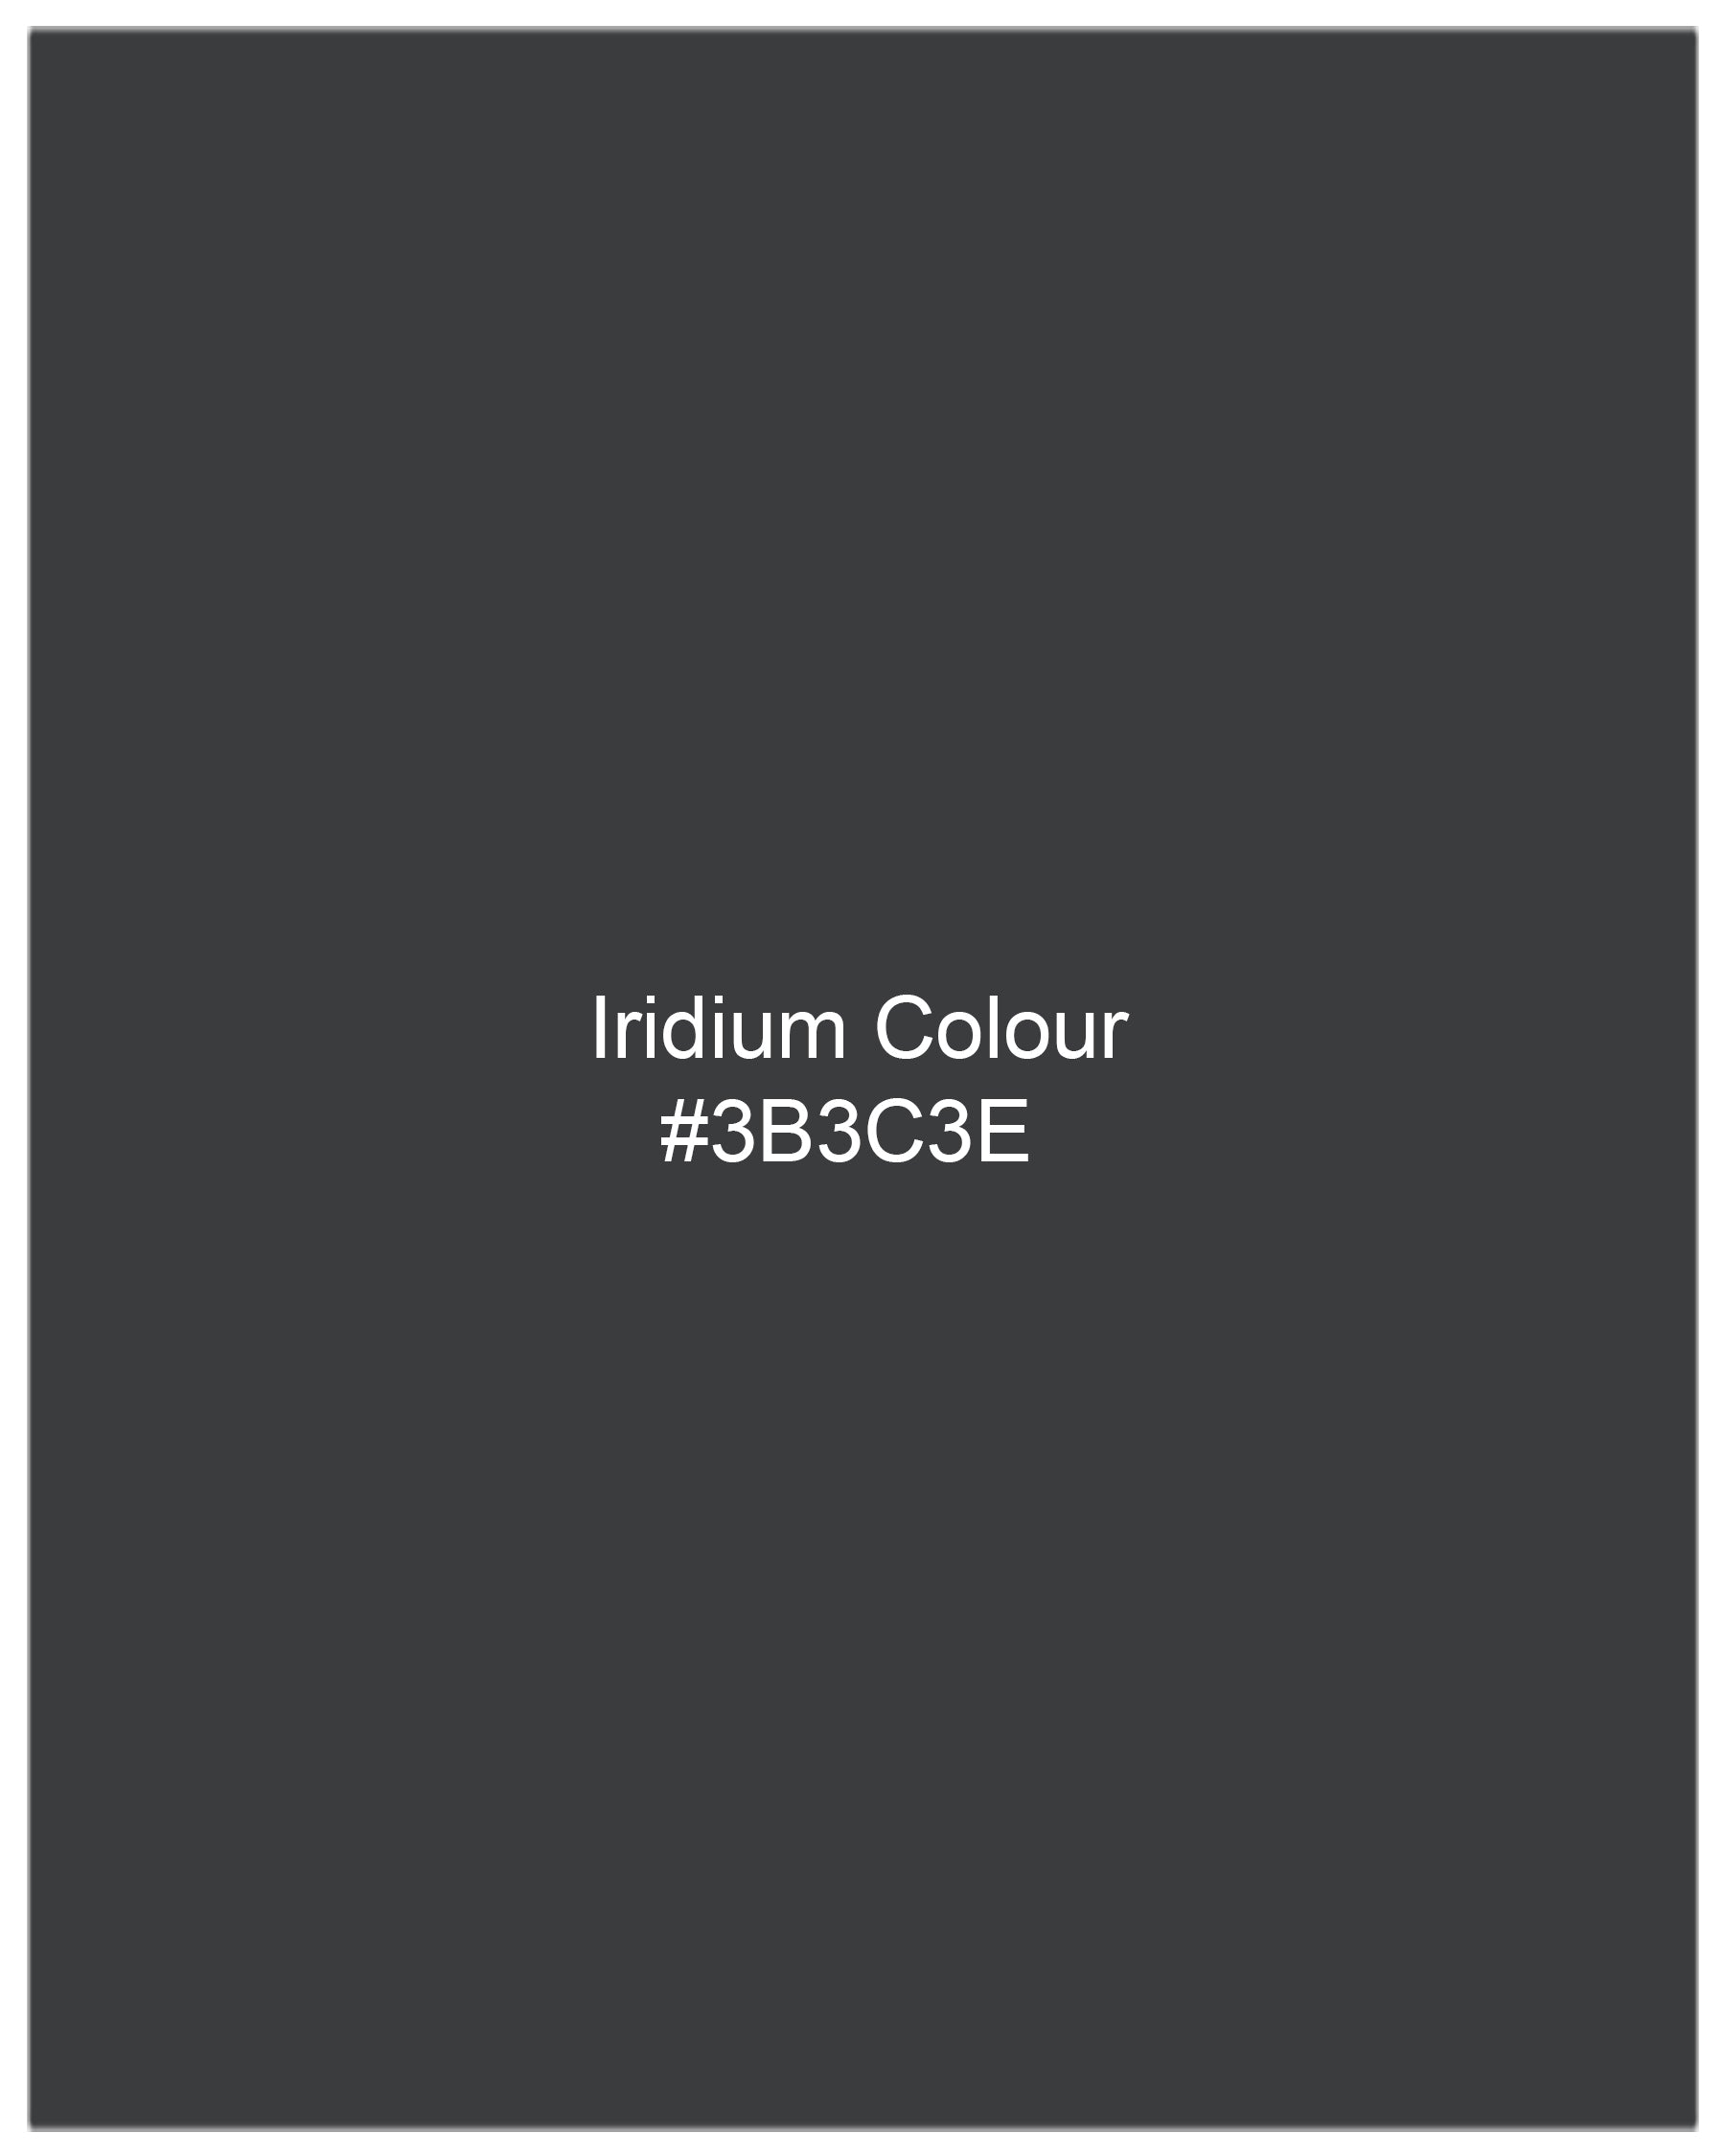 Iridium Gray Flannel Designer Over Shirt 7805-OS-P149-38,7805-OS-P149-38,7805-OS-P149-39,7805-OS-P149-39,7805-OS-P149-40,7805-OS-P149-40,7805-OS-P149-42,7805-OS-P149-42,7805-OS-P149-44,7805-OS-P149-44,7805-OS-P149-46,7805-OS-P149-46,7805-OS-P149-48,7805-OS-P149-48,7805-OS-P149-50,7805-OS-P149-50,7805-OS-P149-52,7805-OS-P149-52